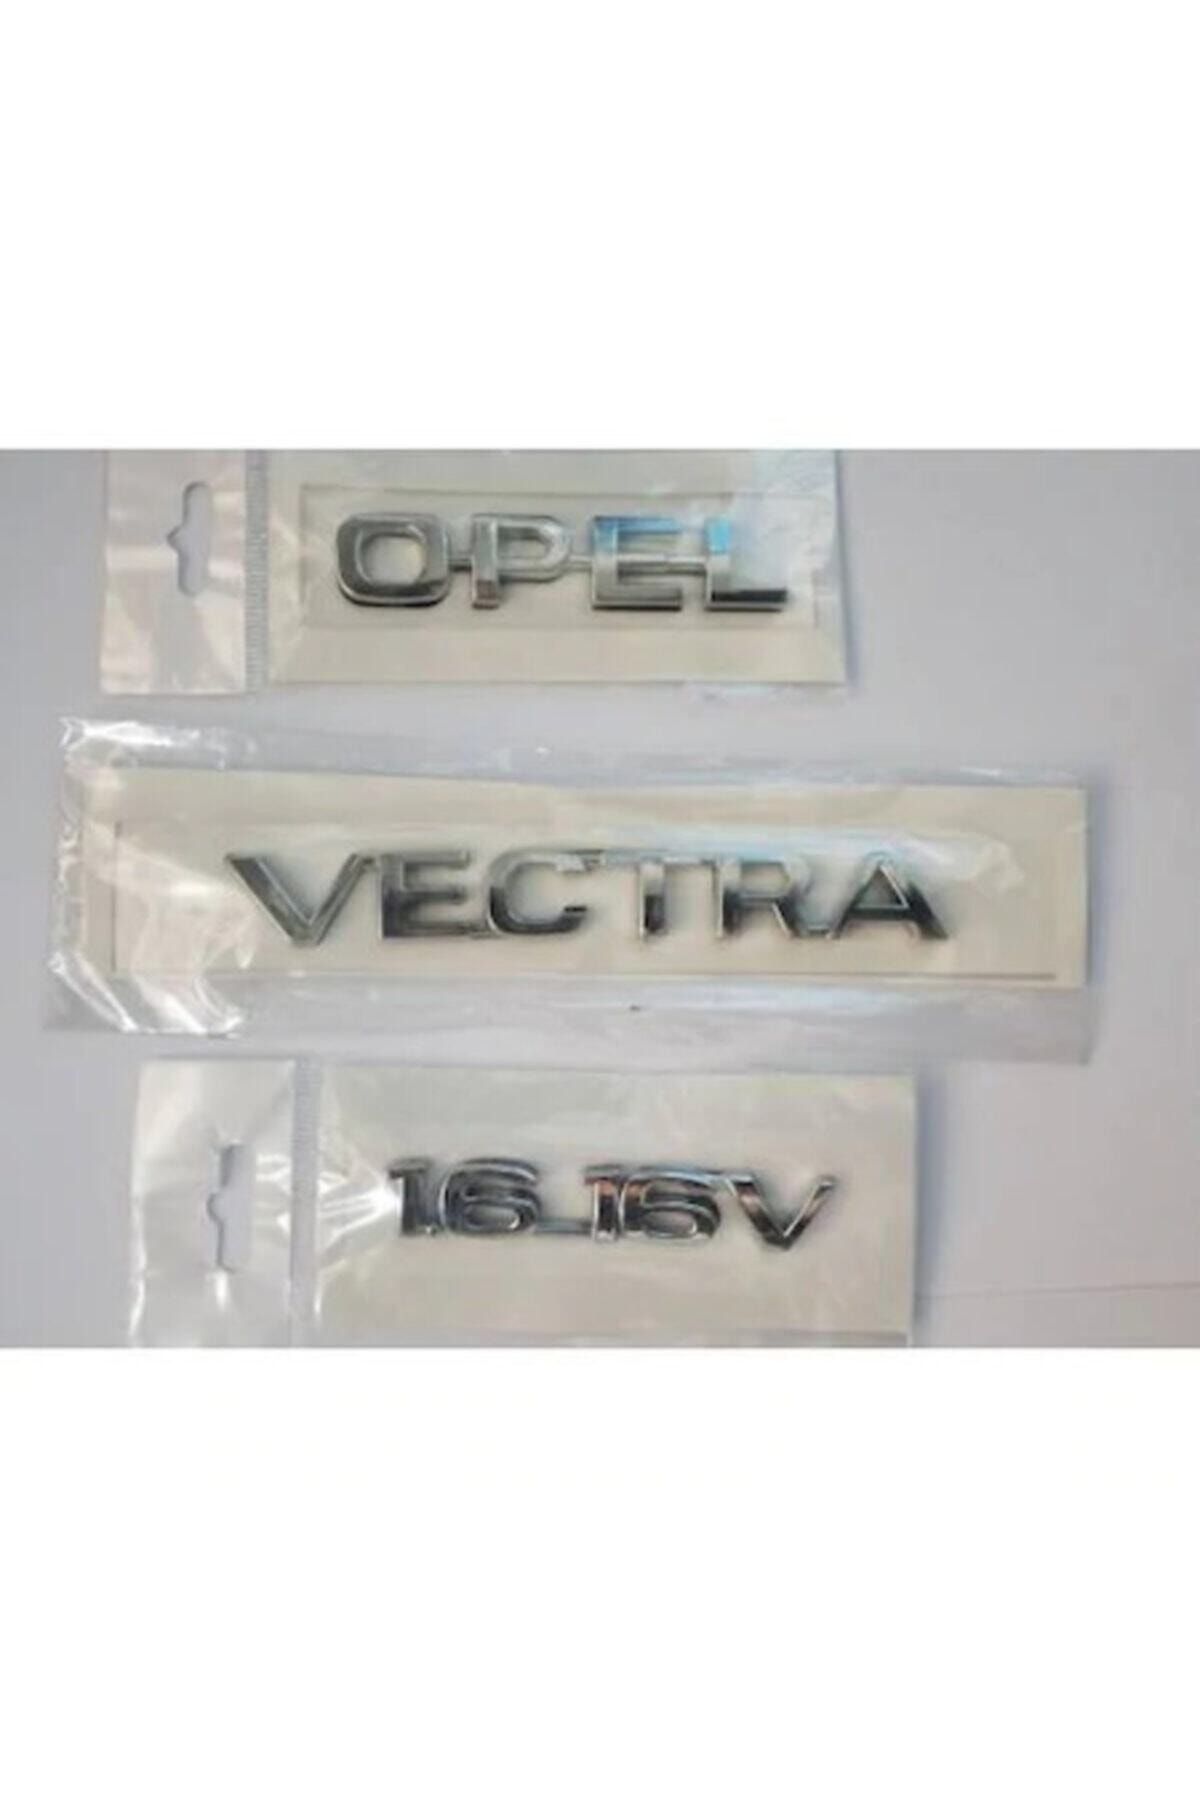 Opel -vectra--vectra-ve-1.6-16v-yazı-3-adet Yüksek Kalite